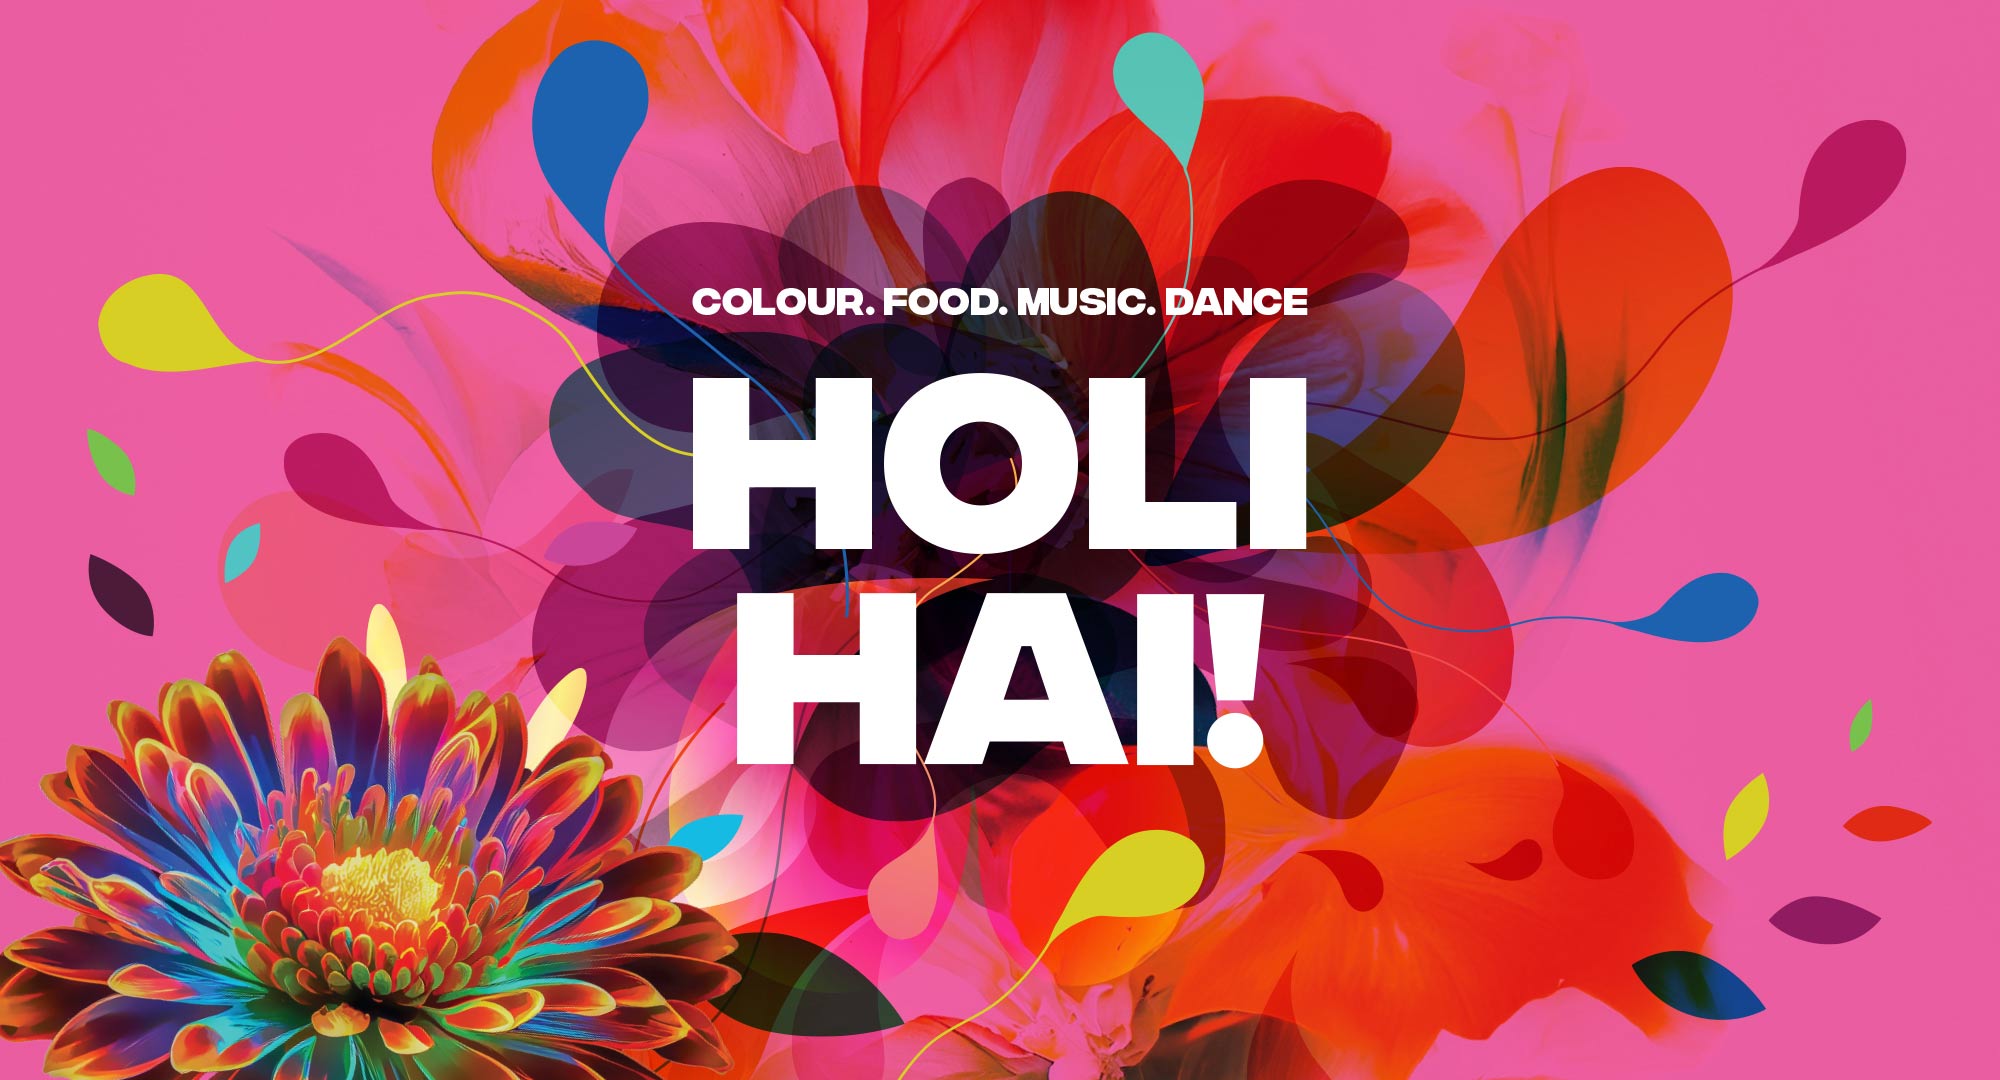 Holi Hai Festival at South Eveleigh